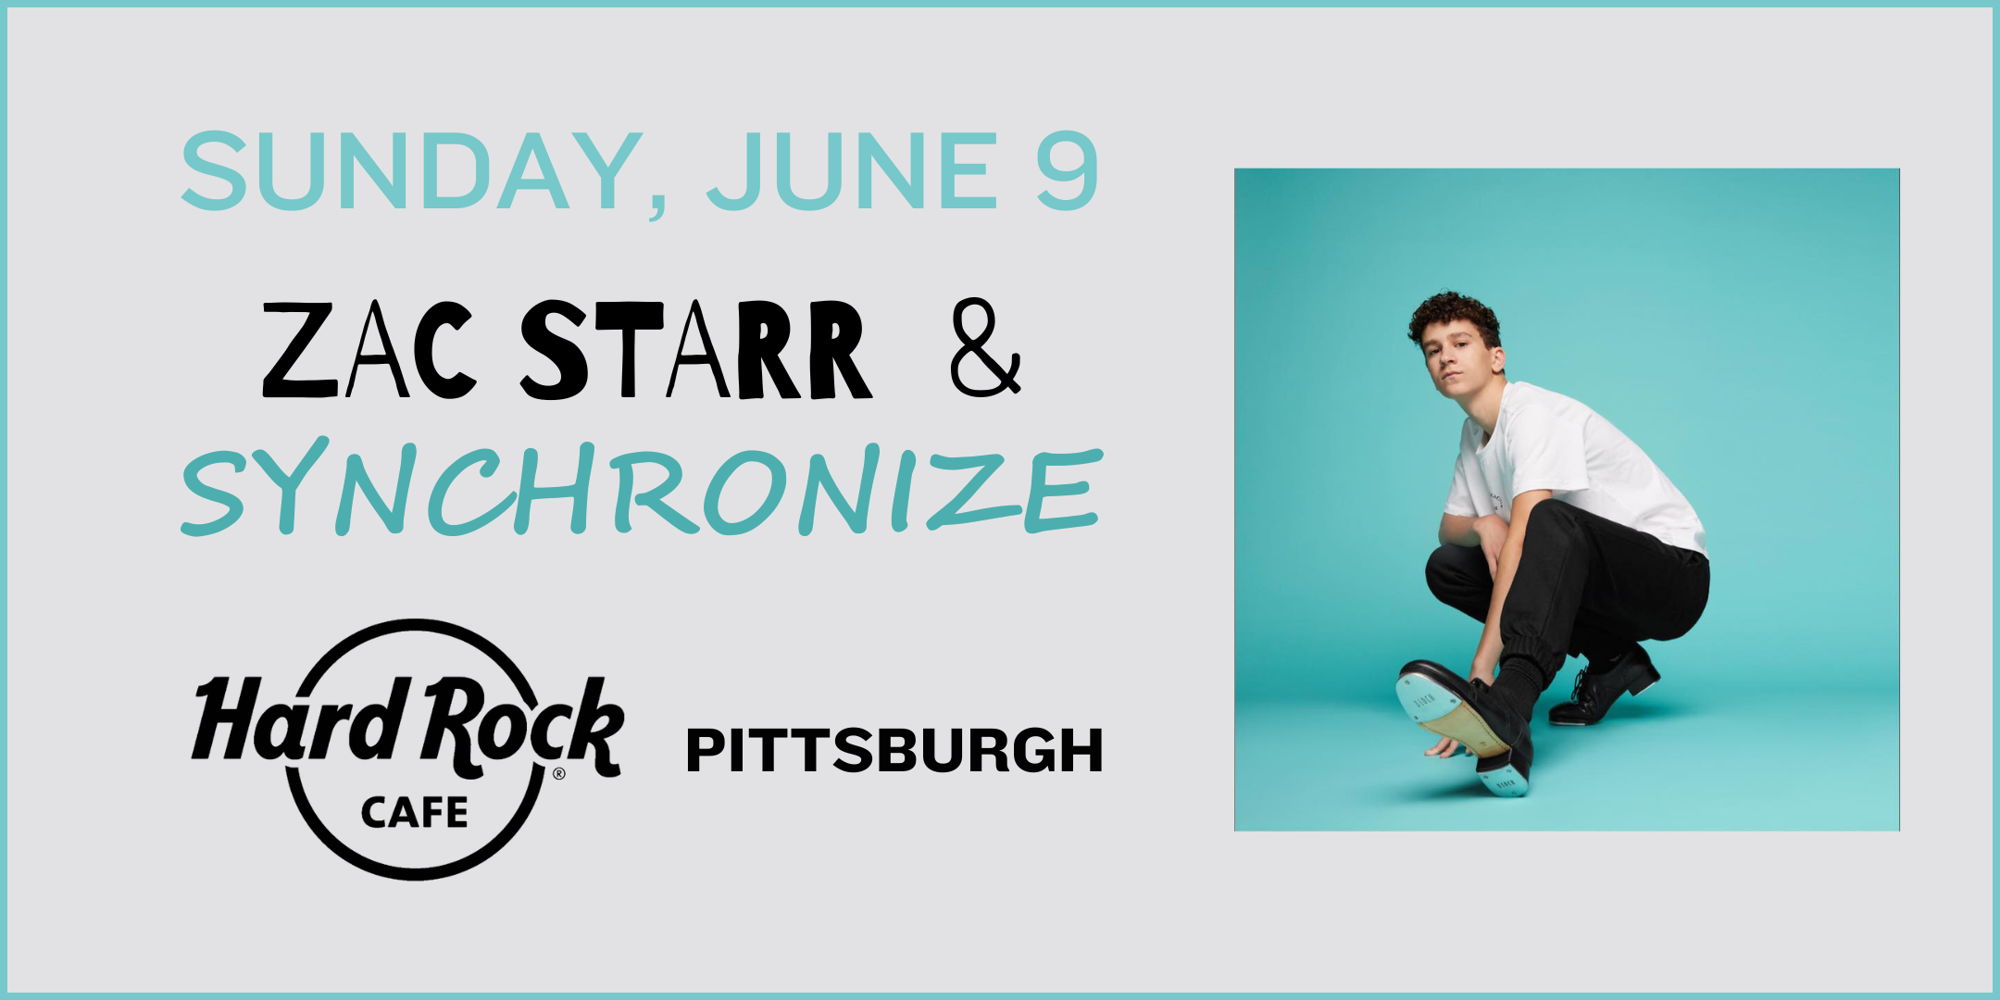 Zac Starr & Synchronize promotional image